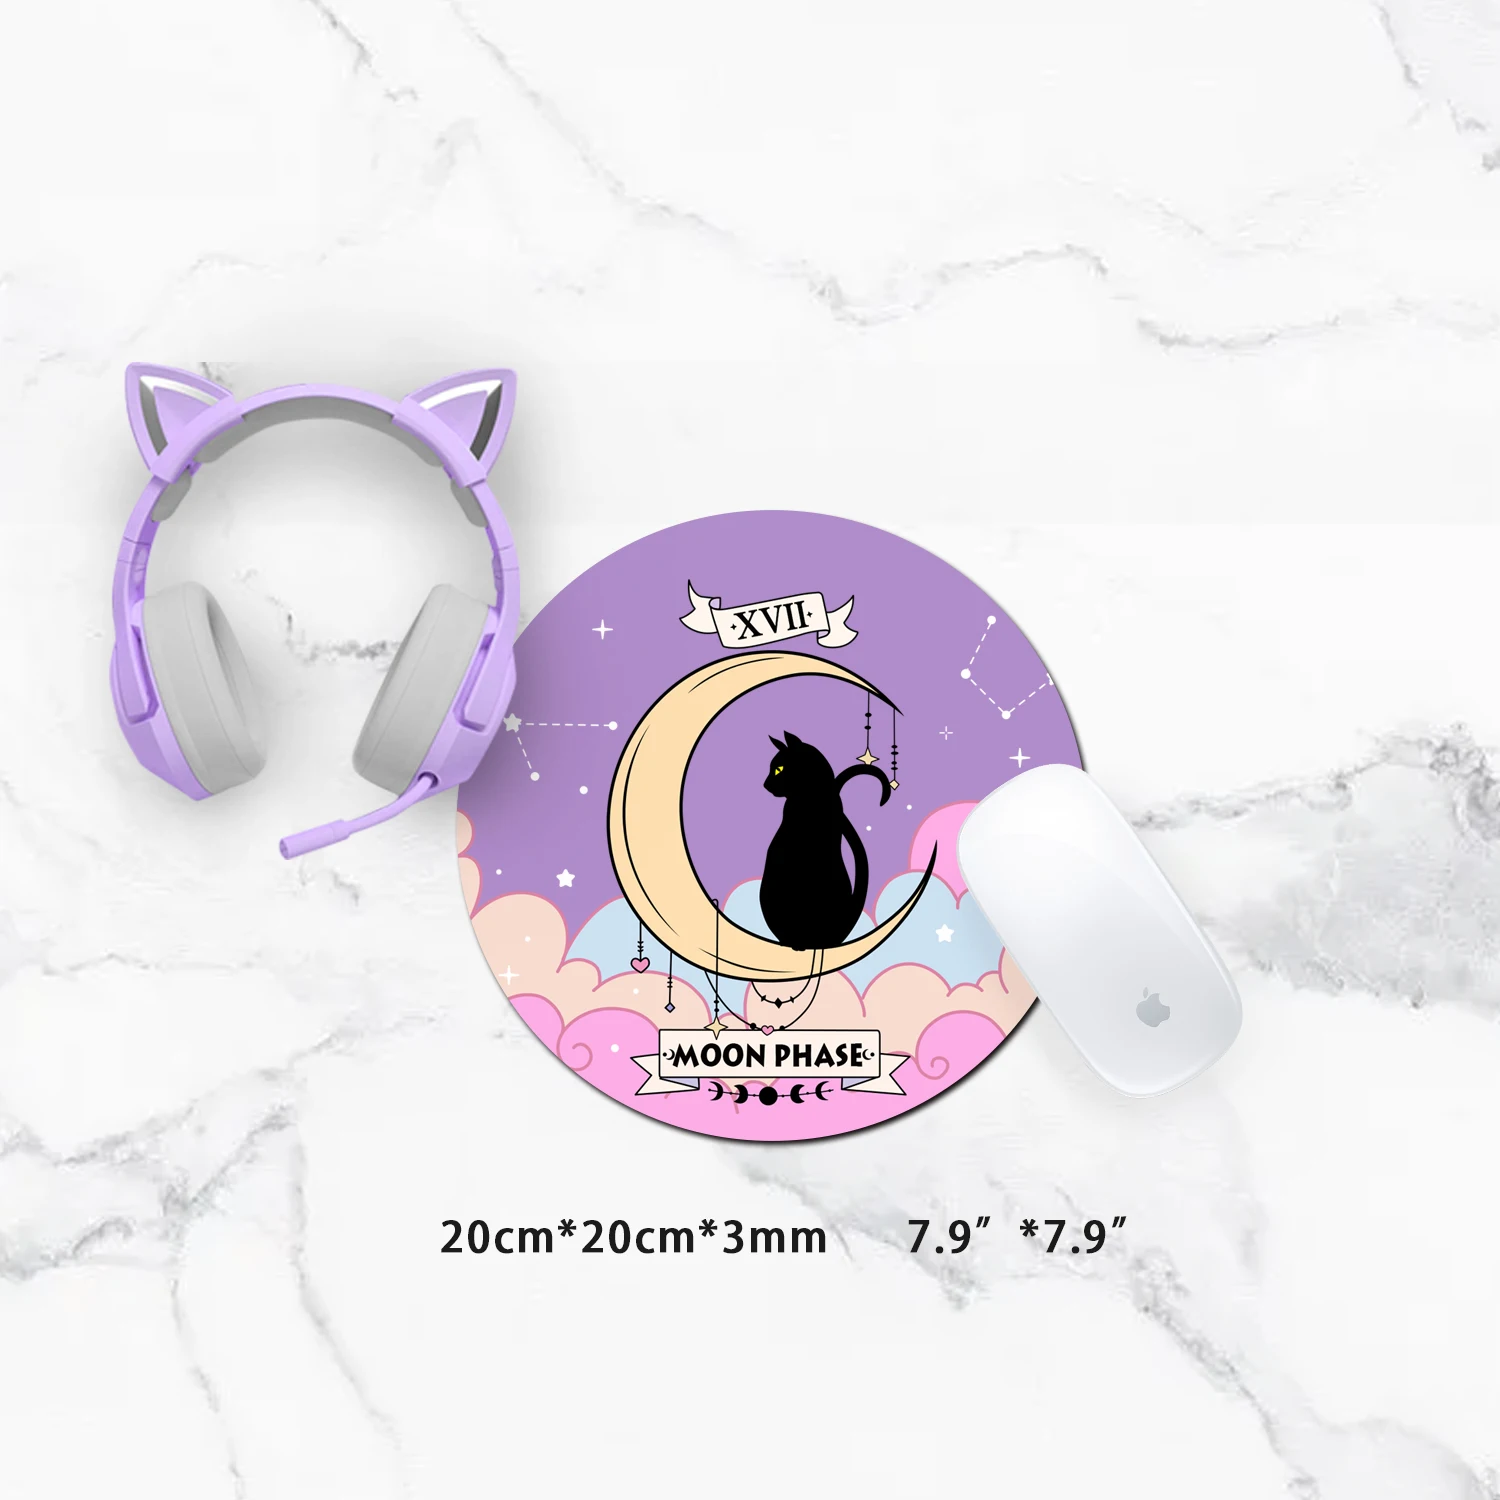 https://ae01.alicdn.com/kf/Sb3e7bb04e22e4de0a17d27b954854e8eG/Extra-Large-Kawaii-Gaming-Mouse-Pad-Cute-Purple-Cat-Bunny-XXL-Desk-Mat-Water-Proof-Nonslip.jpg